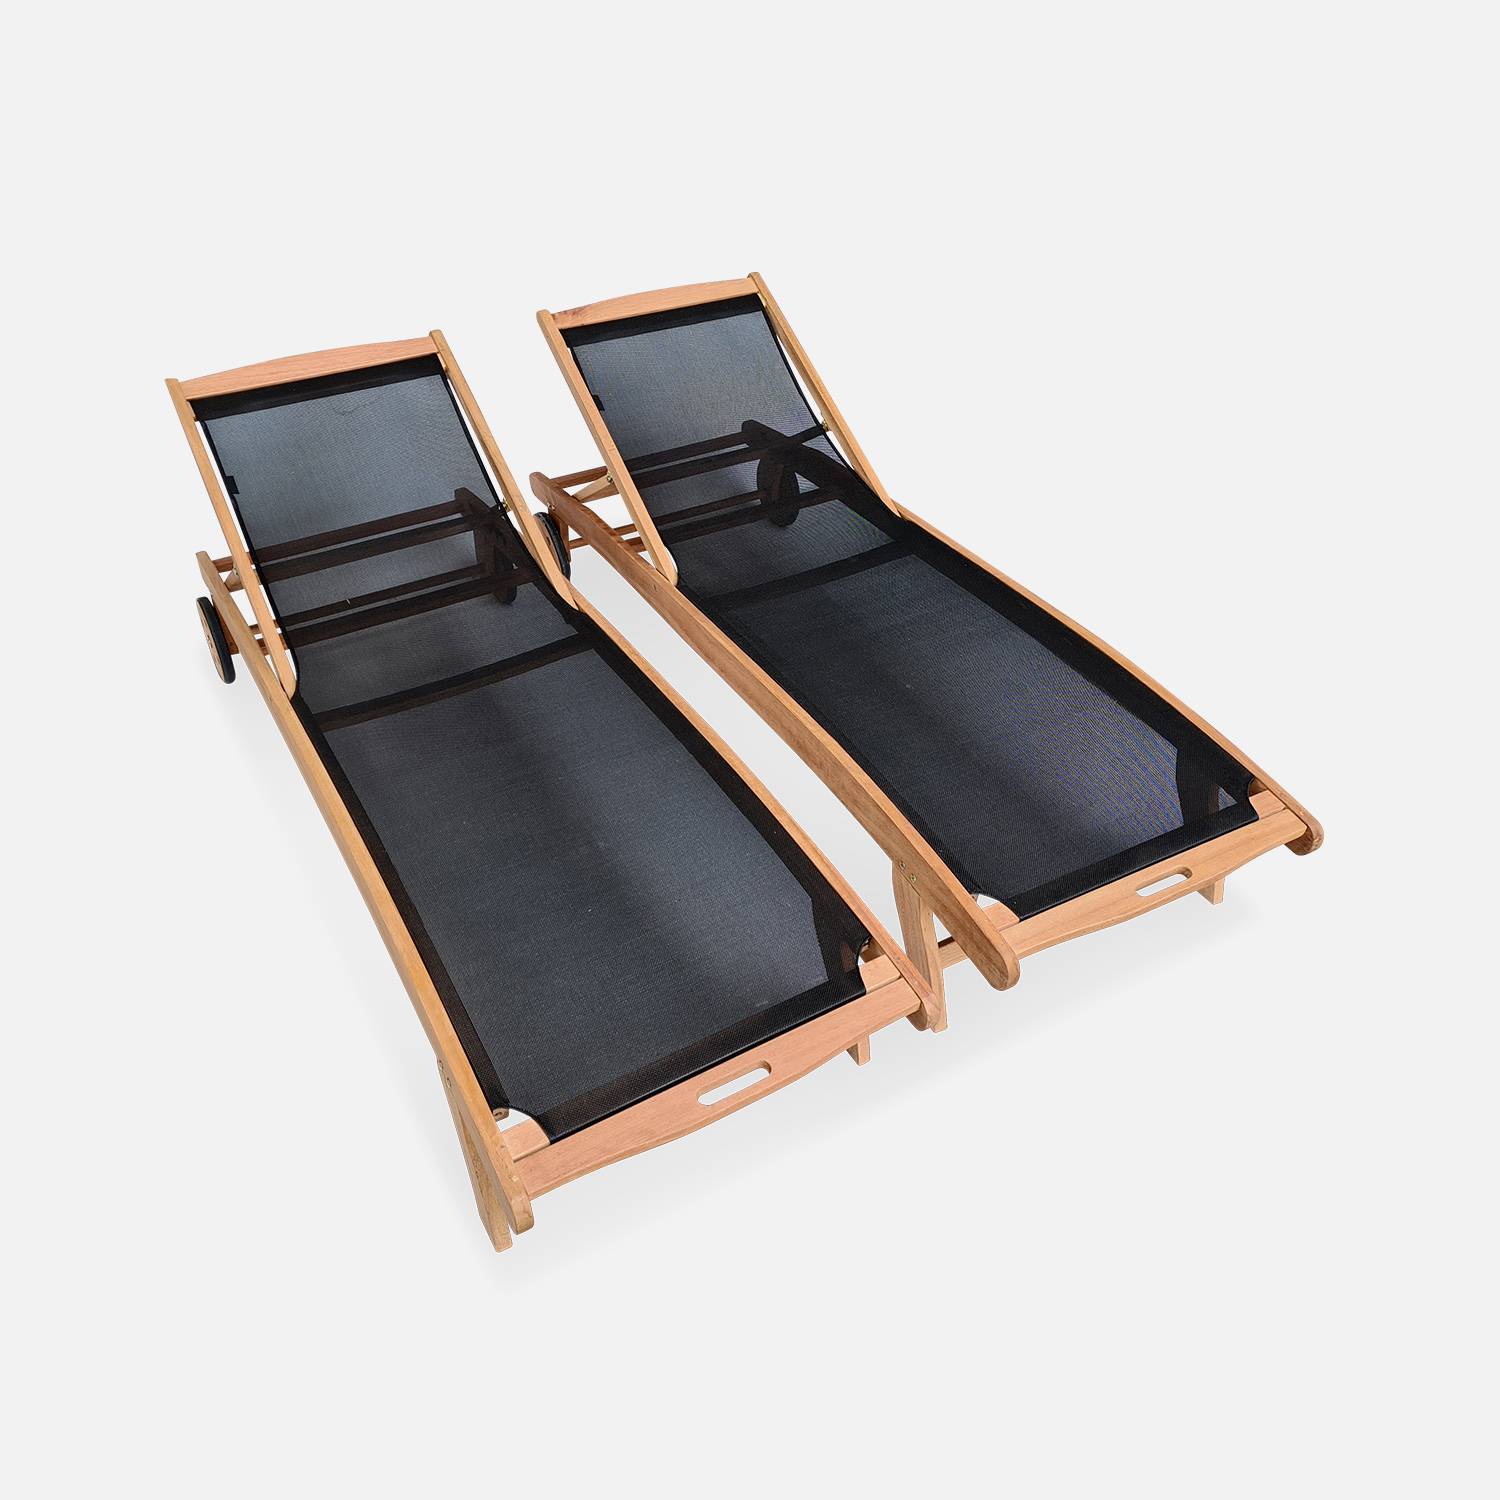 2er Set Holz Sonnenliegen - Marbella - 2 Liegestühle aus geöltem FSC-Eukalyptusholz und Textilene  Photo1